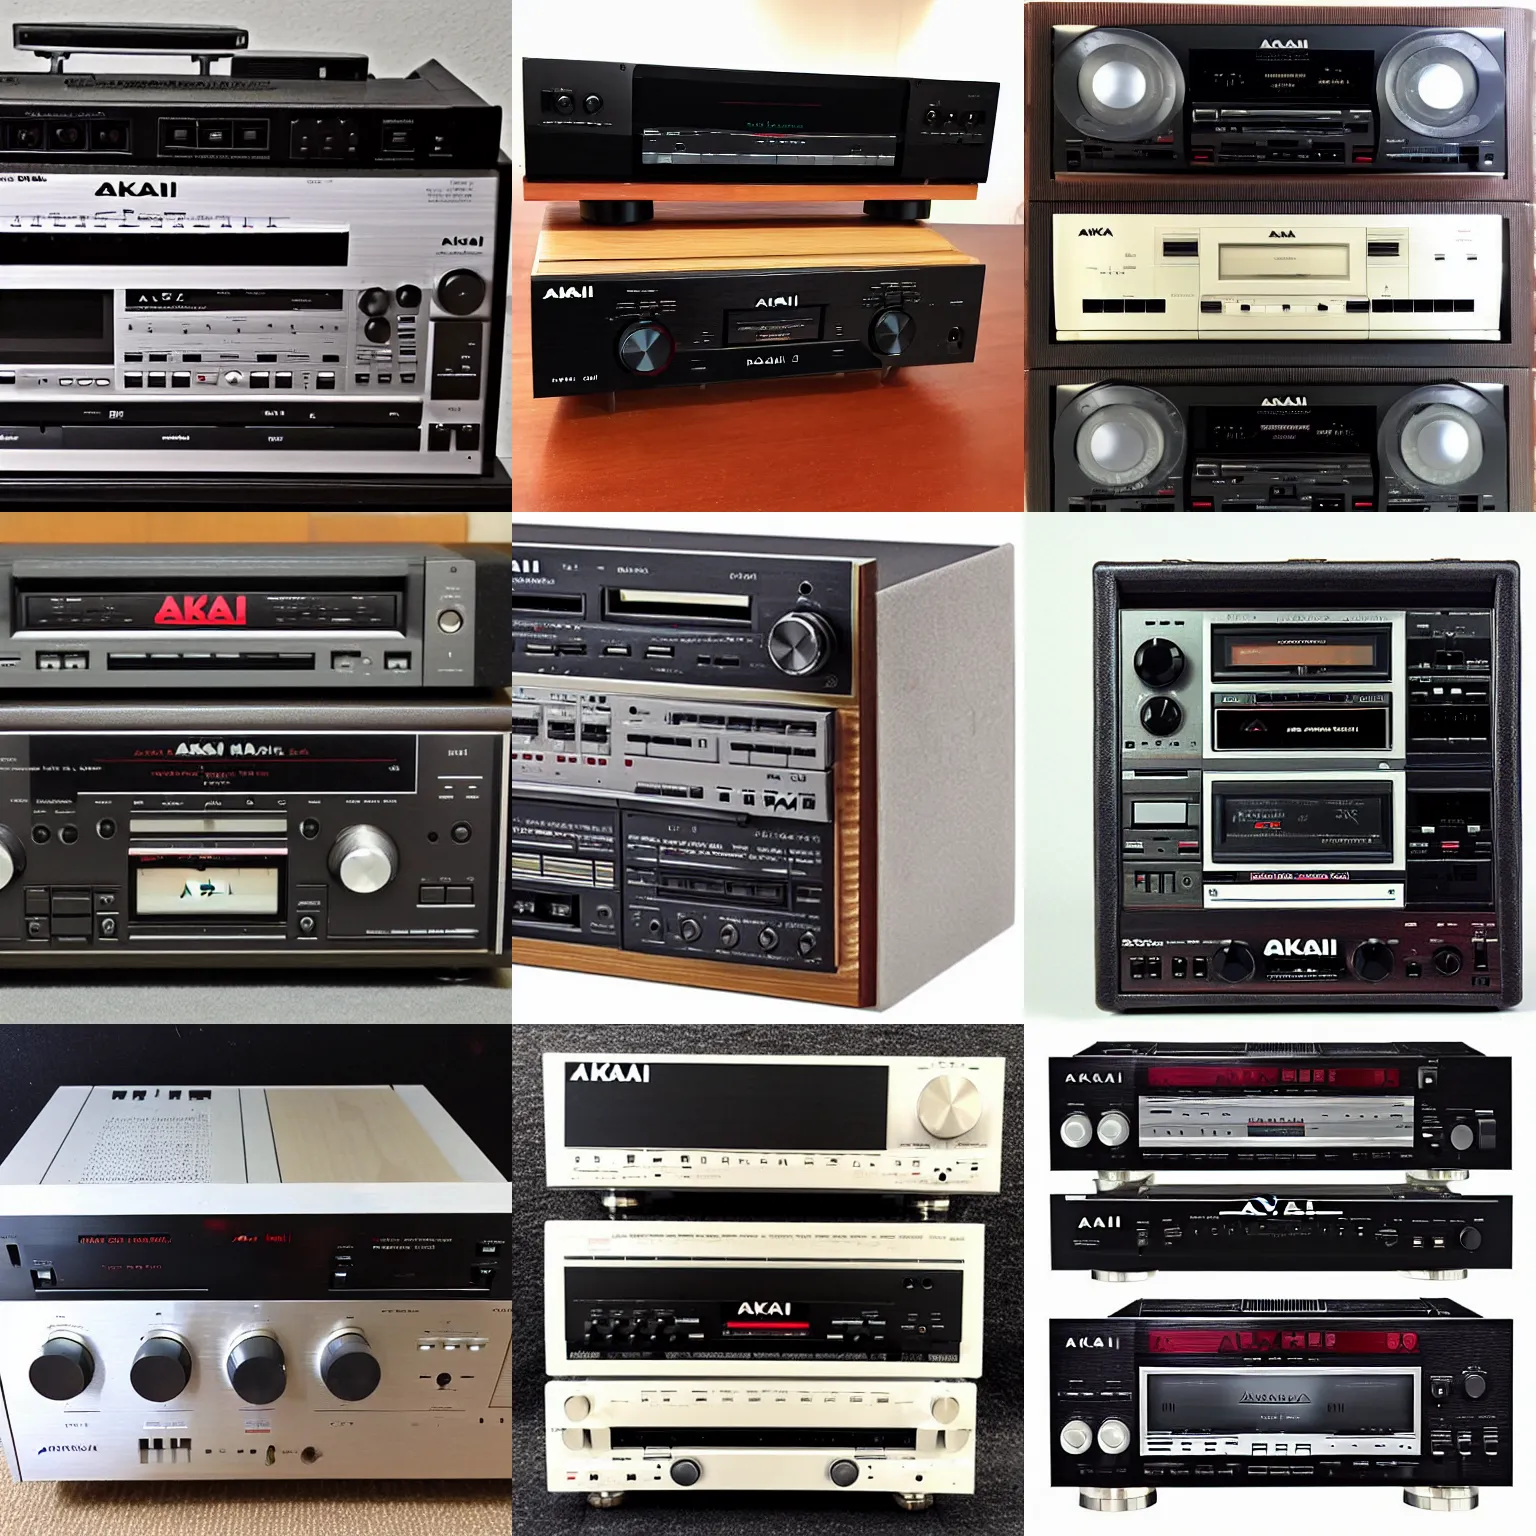 Prompt: akai hx - 2 7 w double cassette deck stereo hi - fi dual cassette,